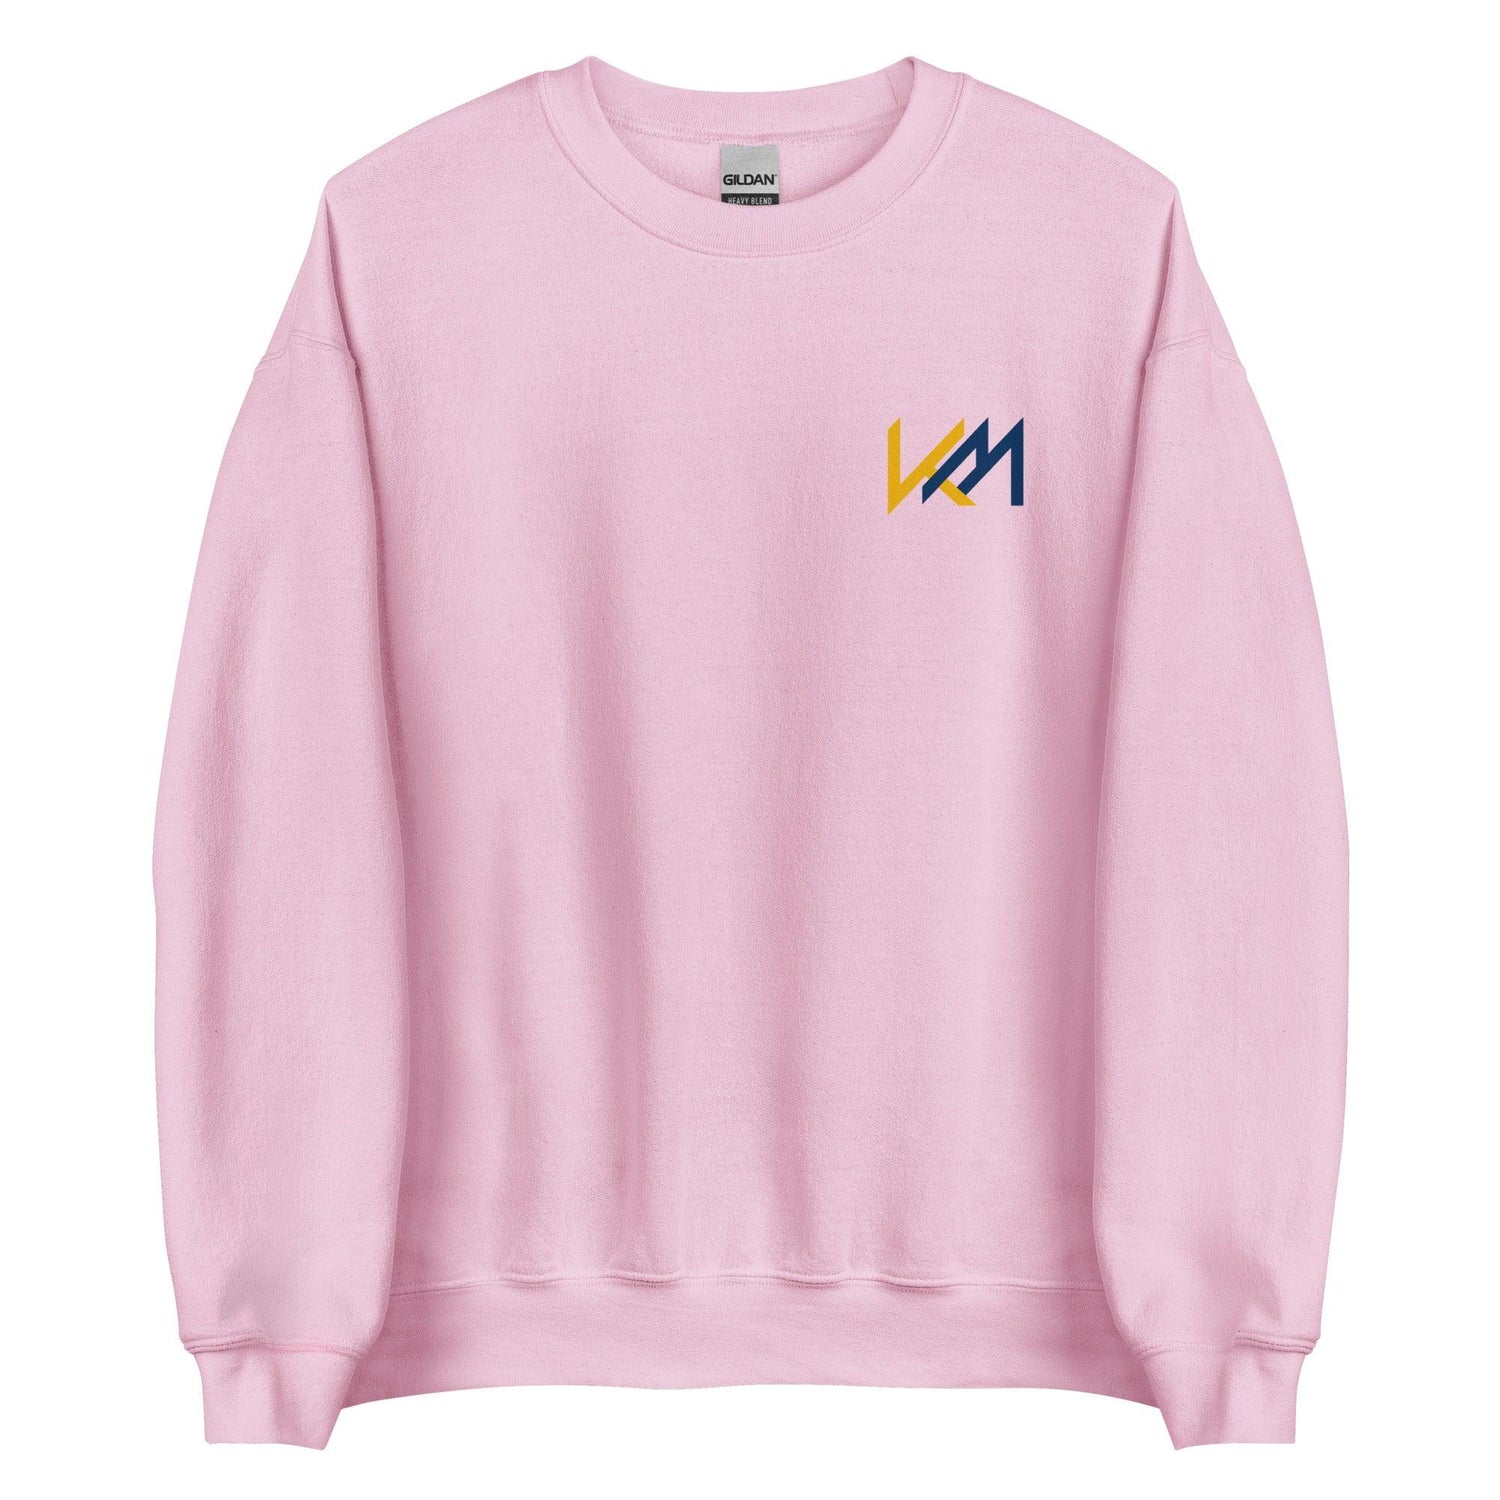 Kerry Martin "Essential" Sweatshirt - Fan Arch